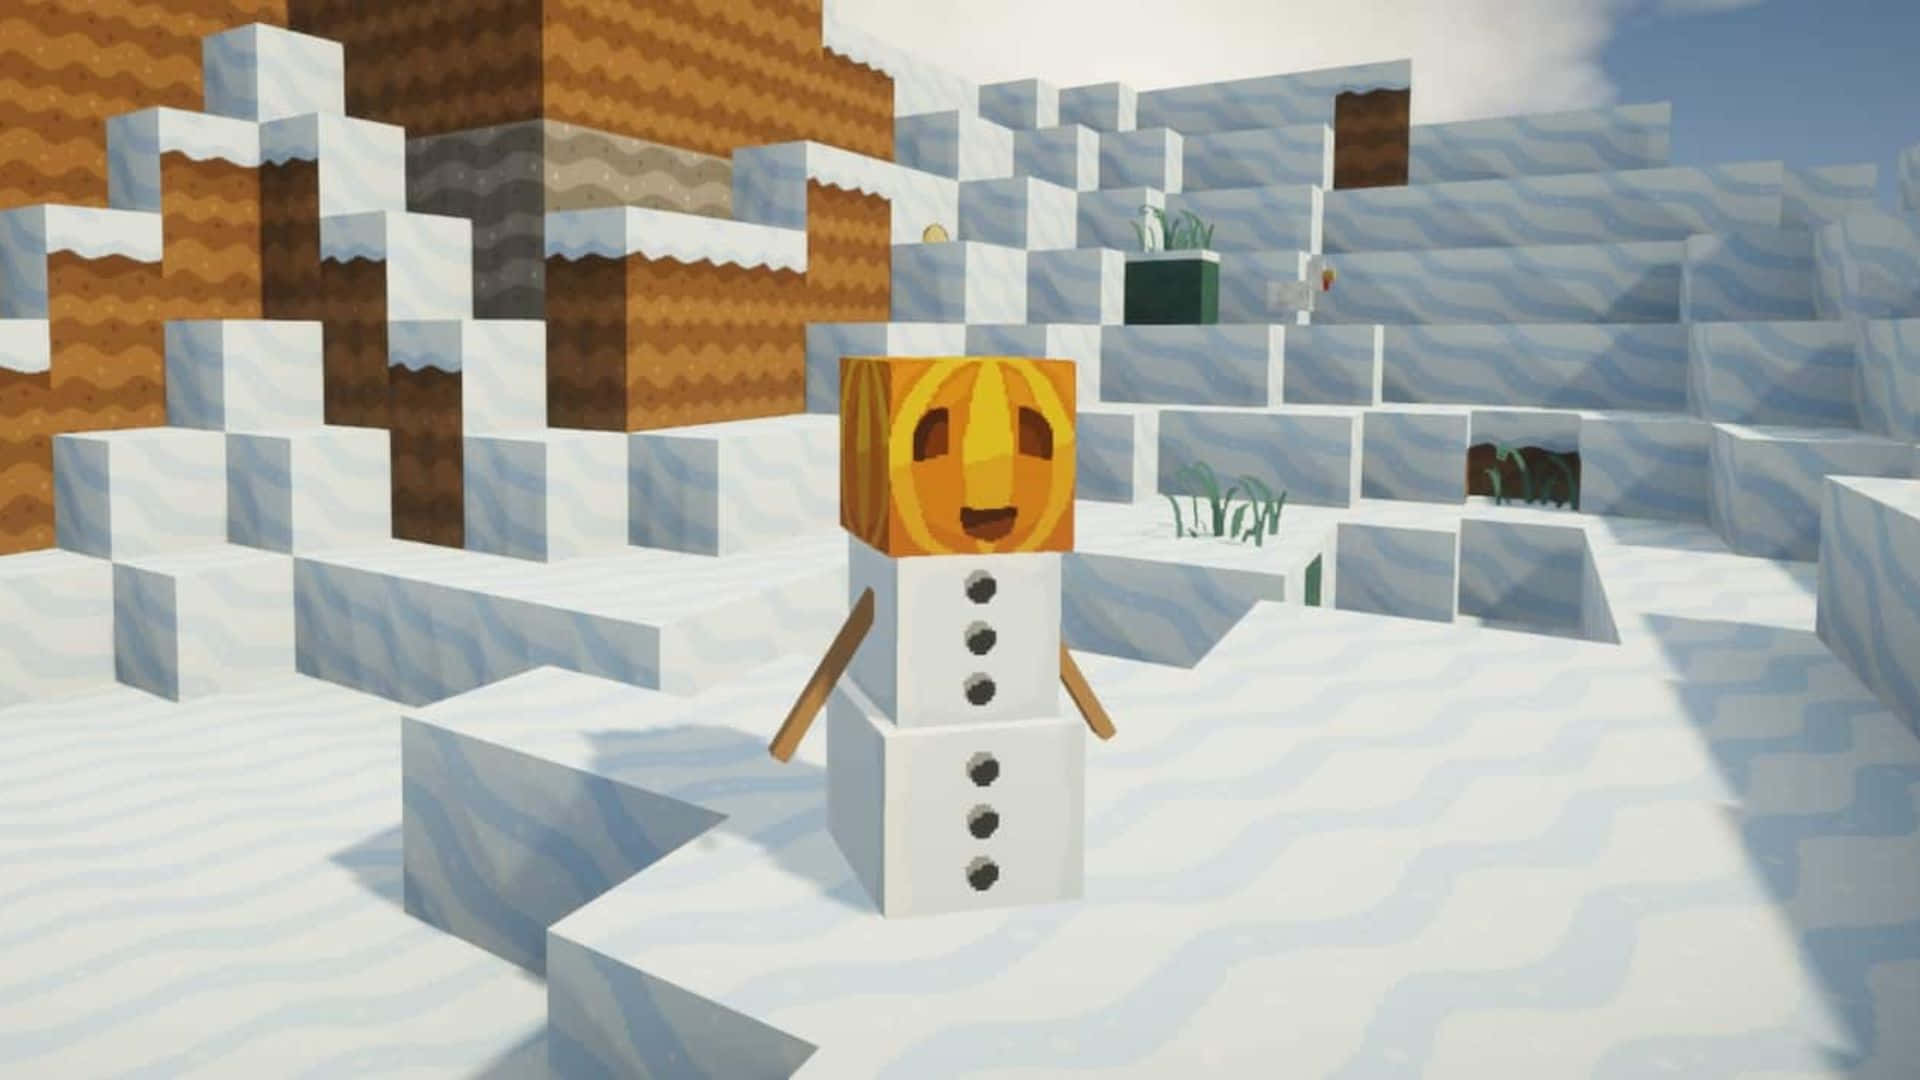 Charming Minecraft Snow Golem in a Snowy Landscape Wallpaper